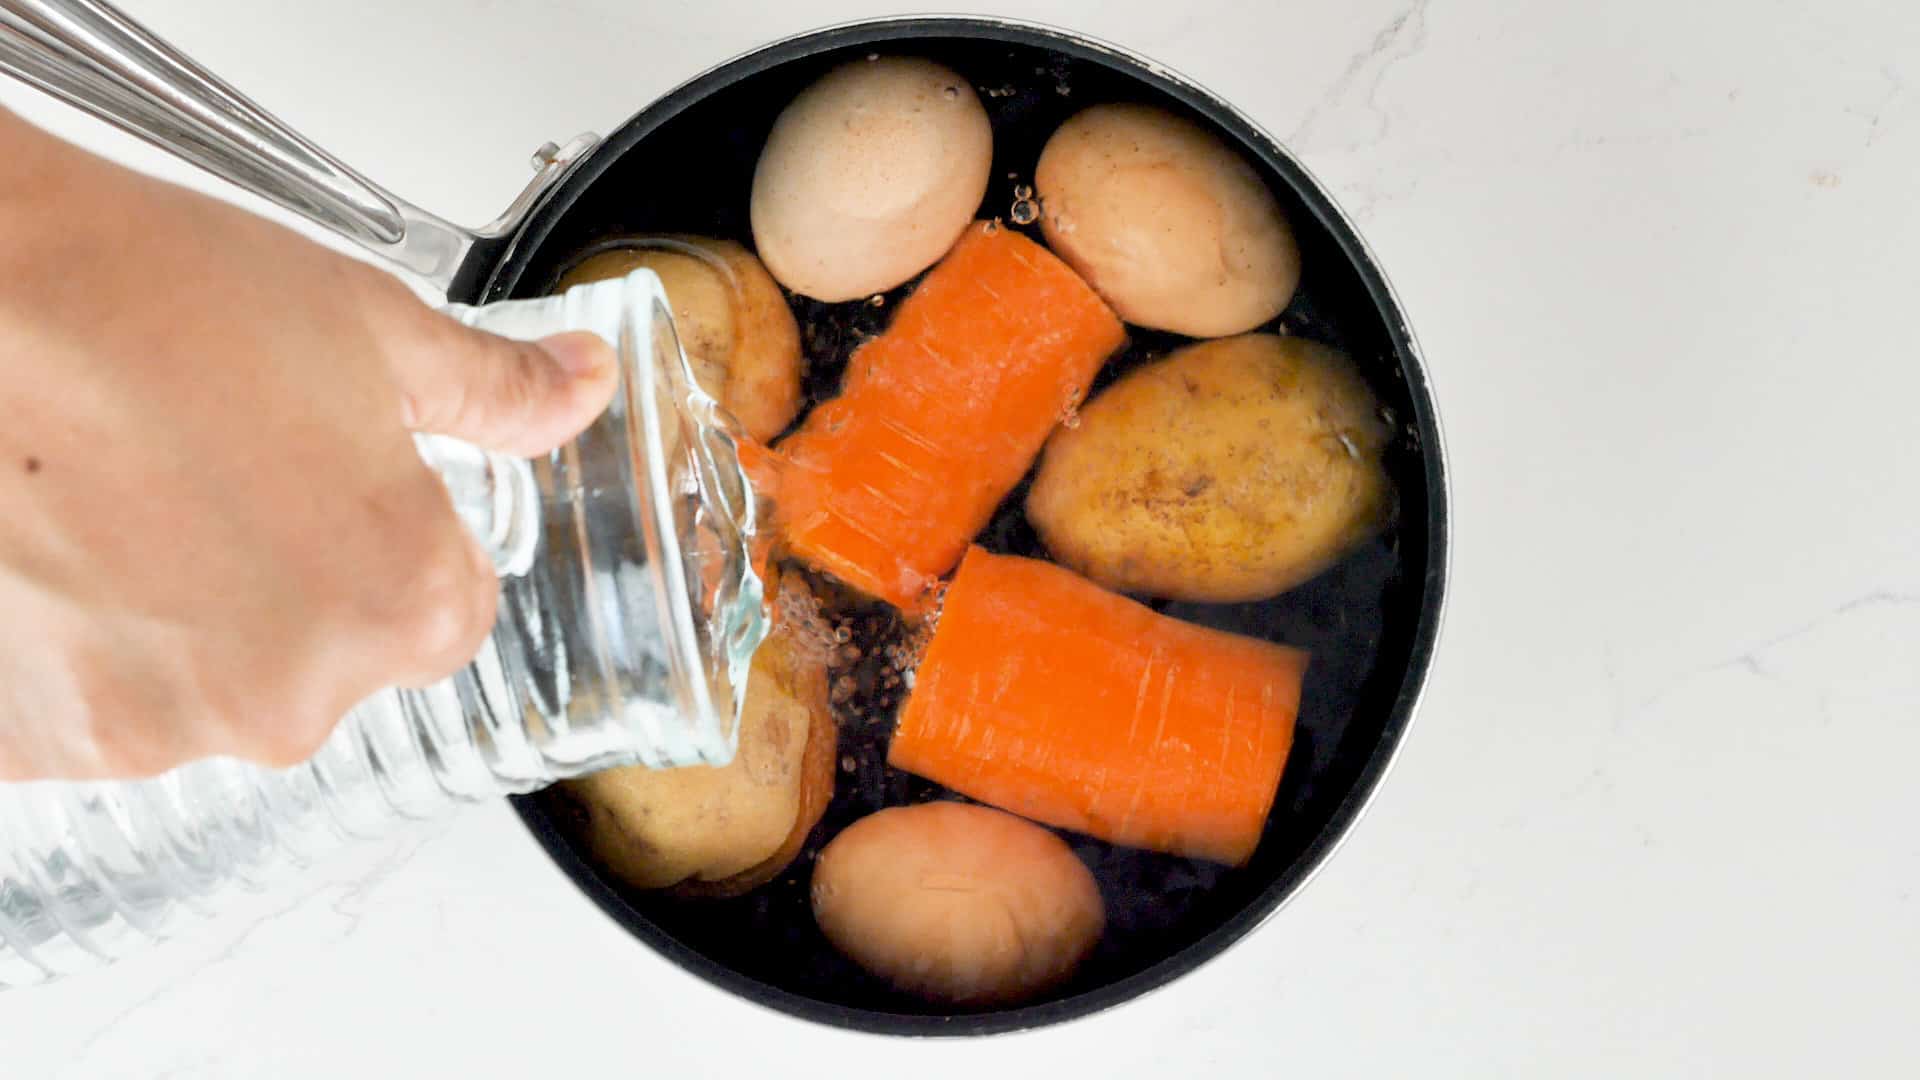 Boiling potato, egg, and carrot.